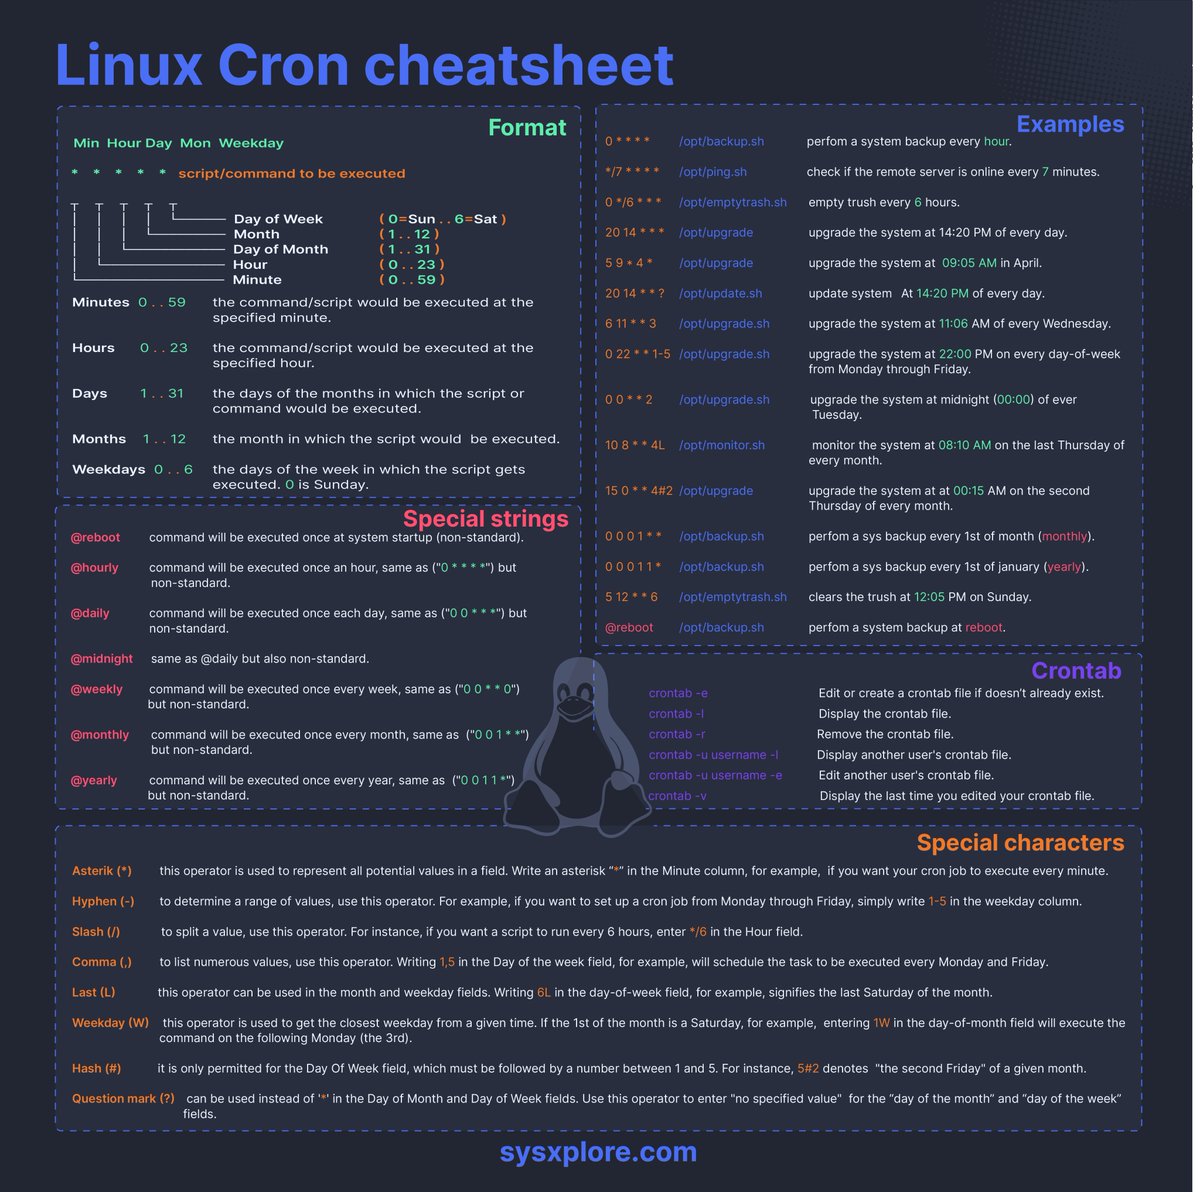 Linux cron cheatsheet